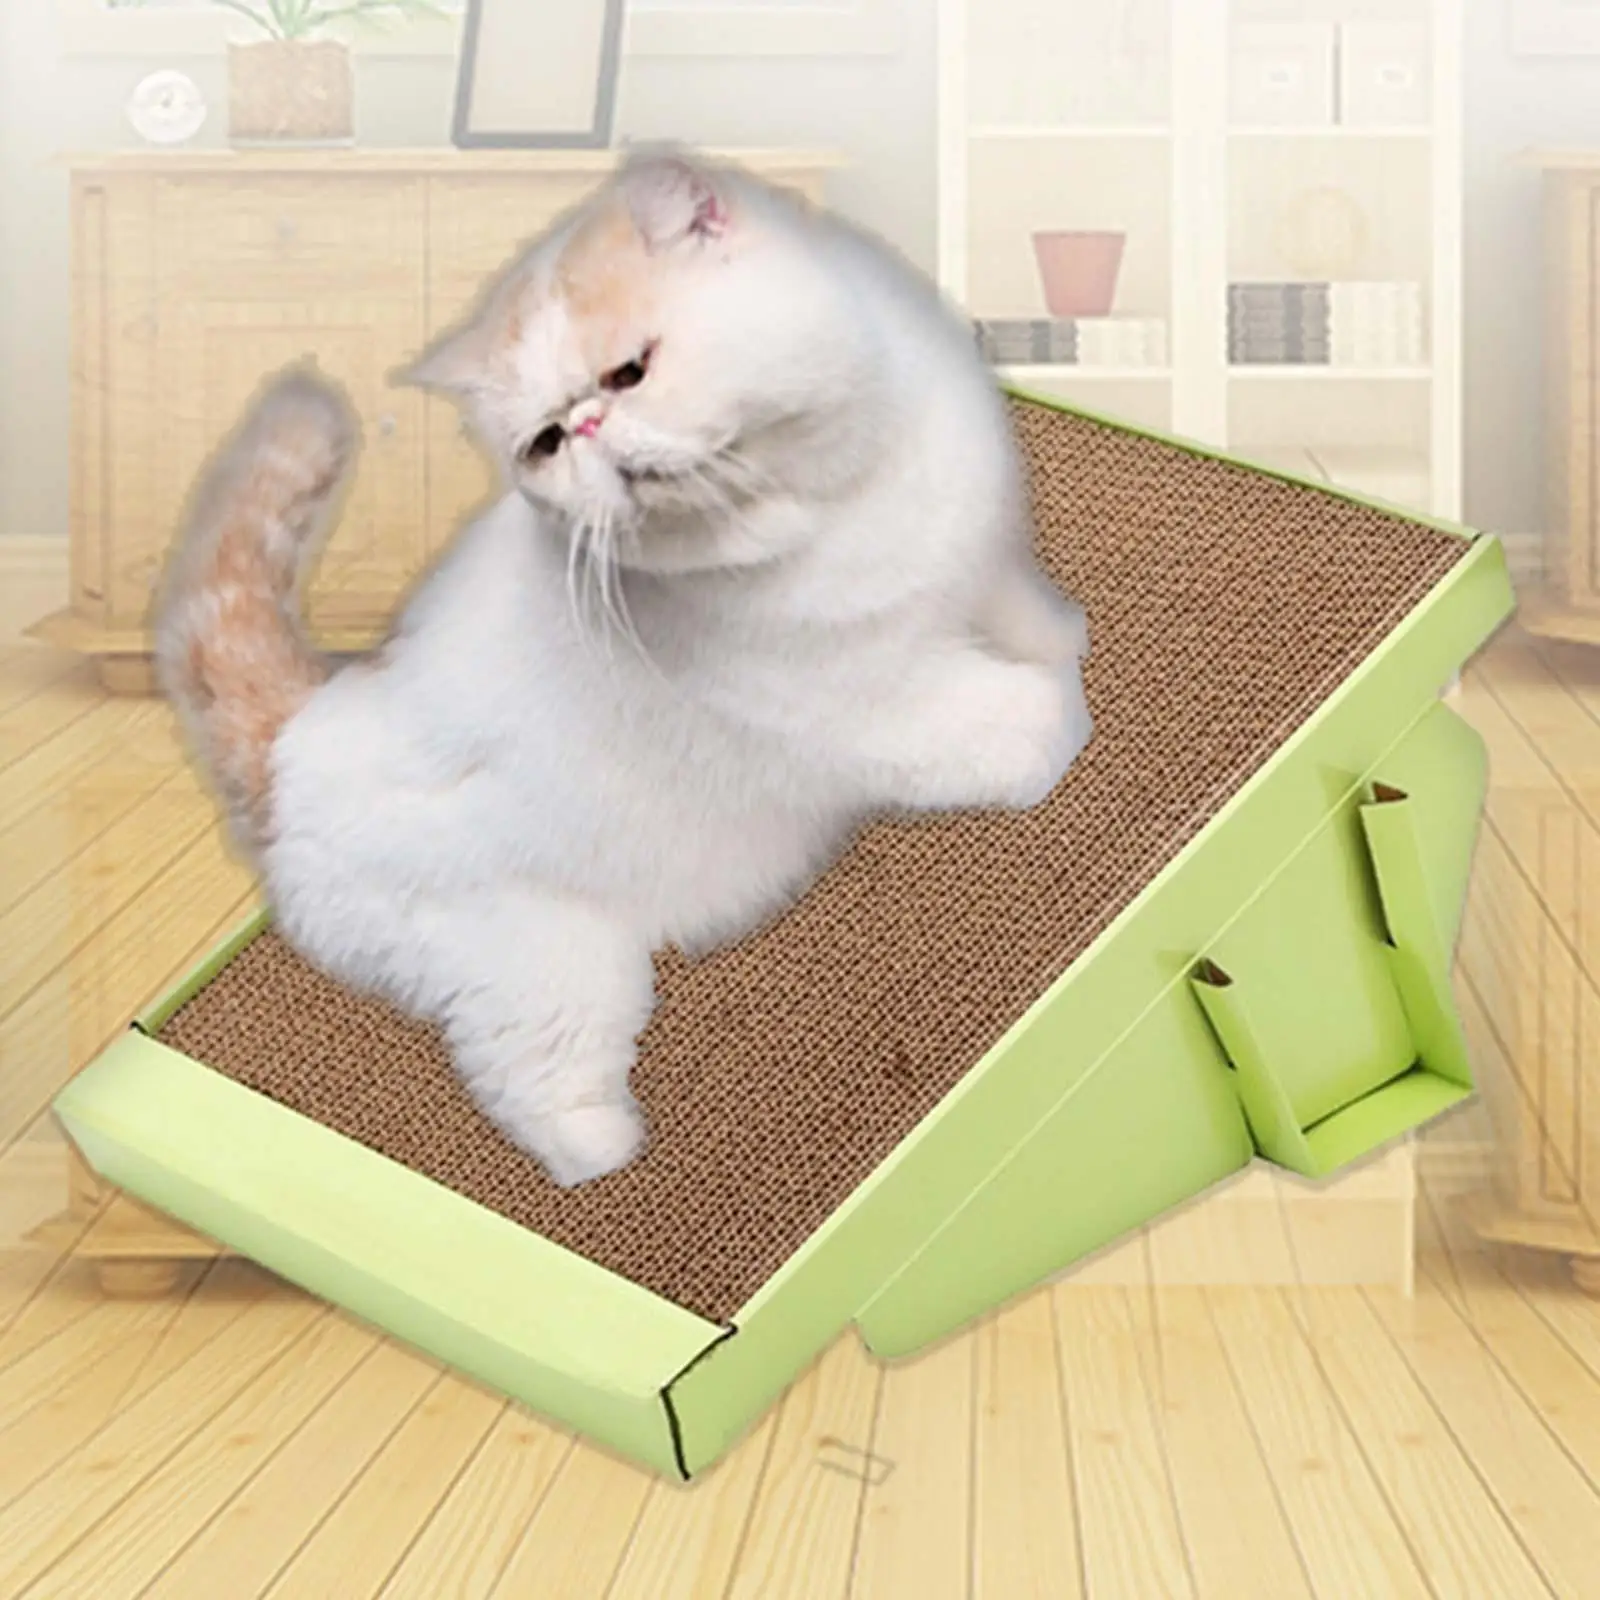 Cat Scratching Pad Slide, Corrugated Paper Scratcher Cardboard, Interactive Play Toy, Scratcher Board, Pet Supplies